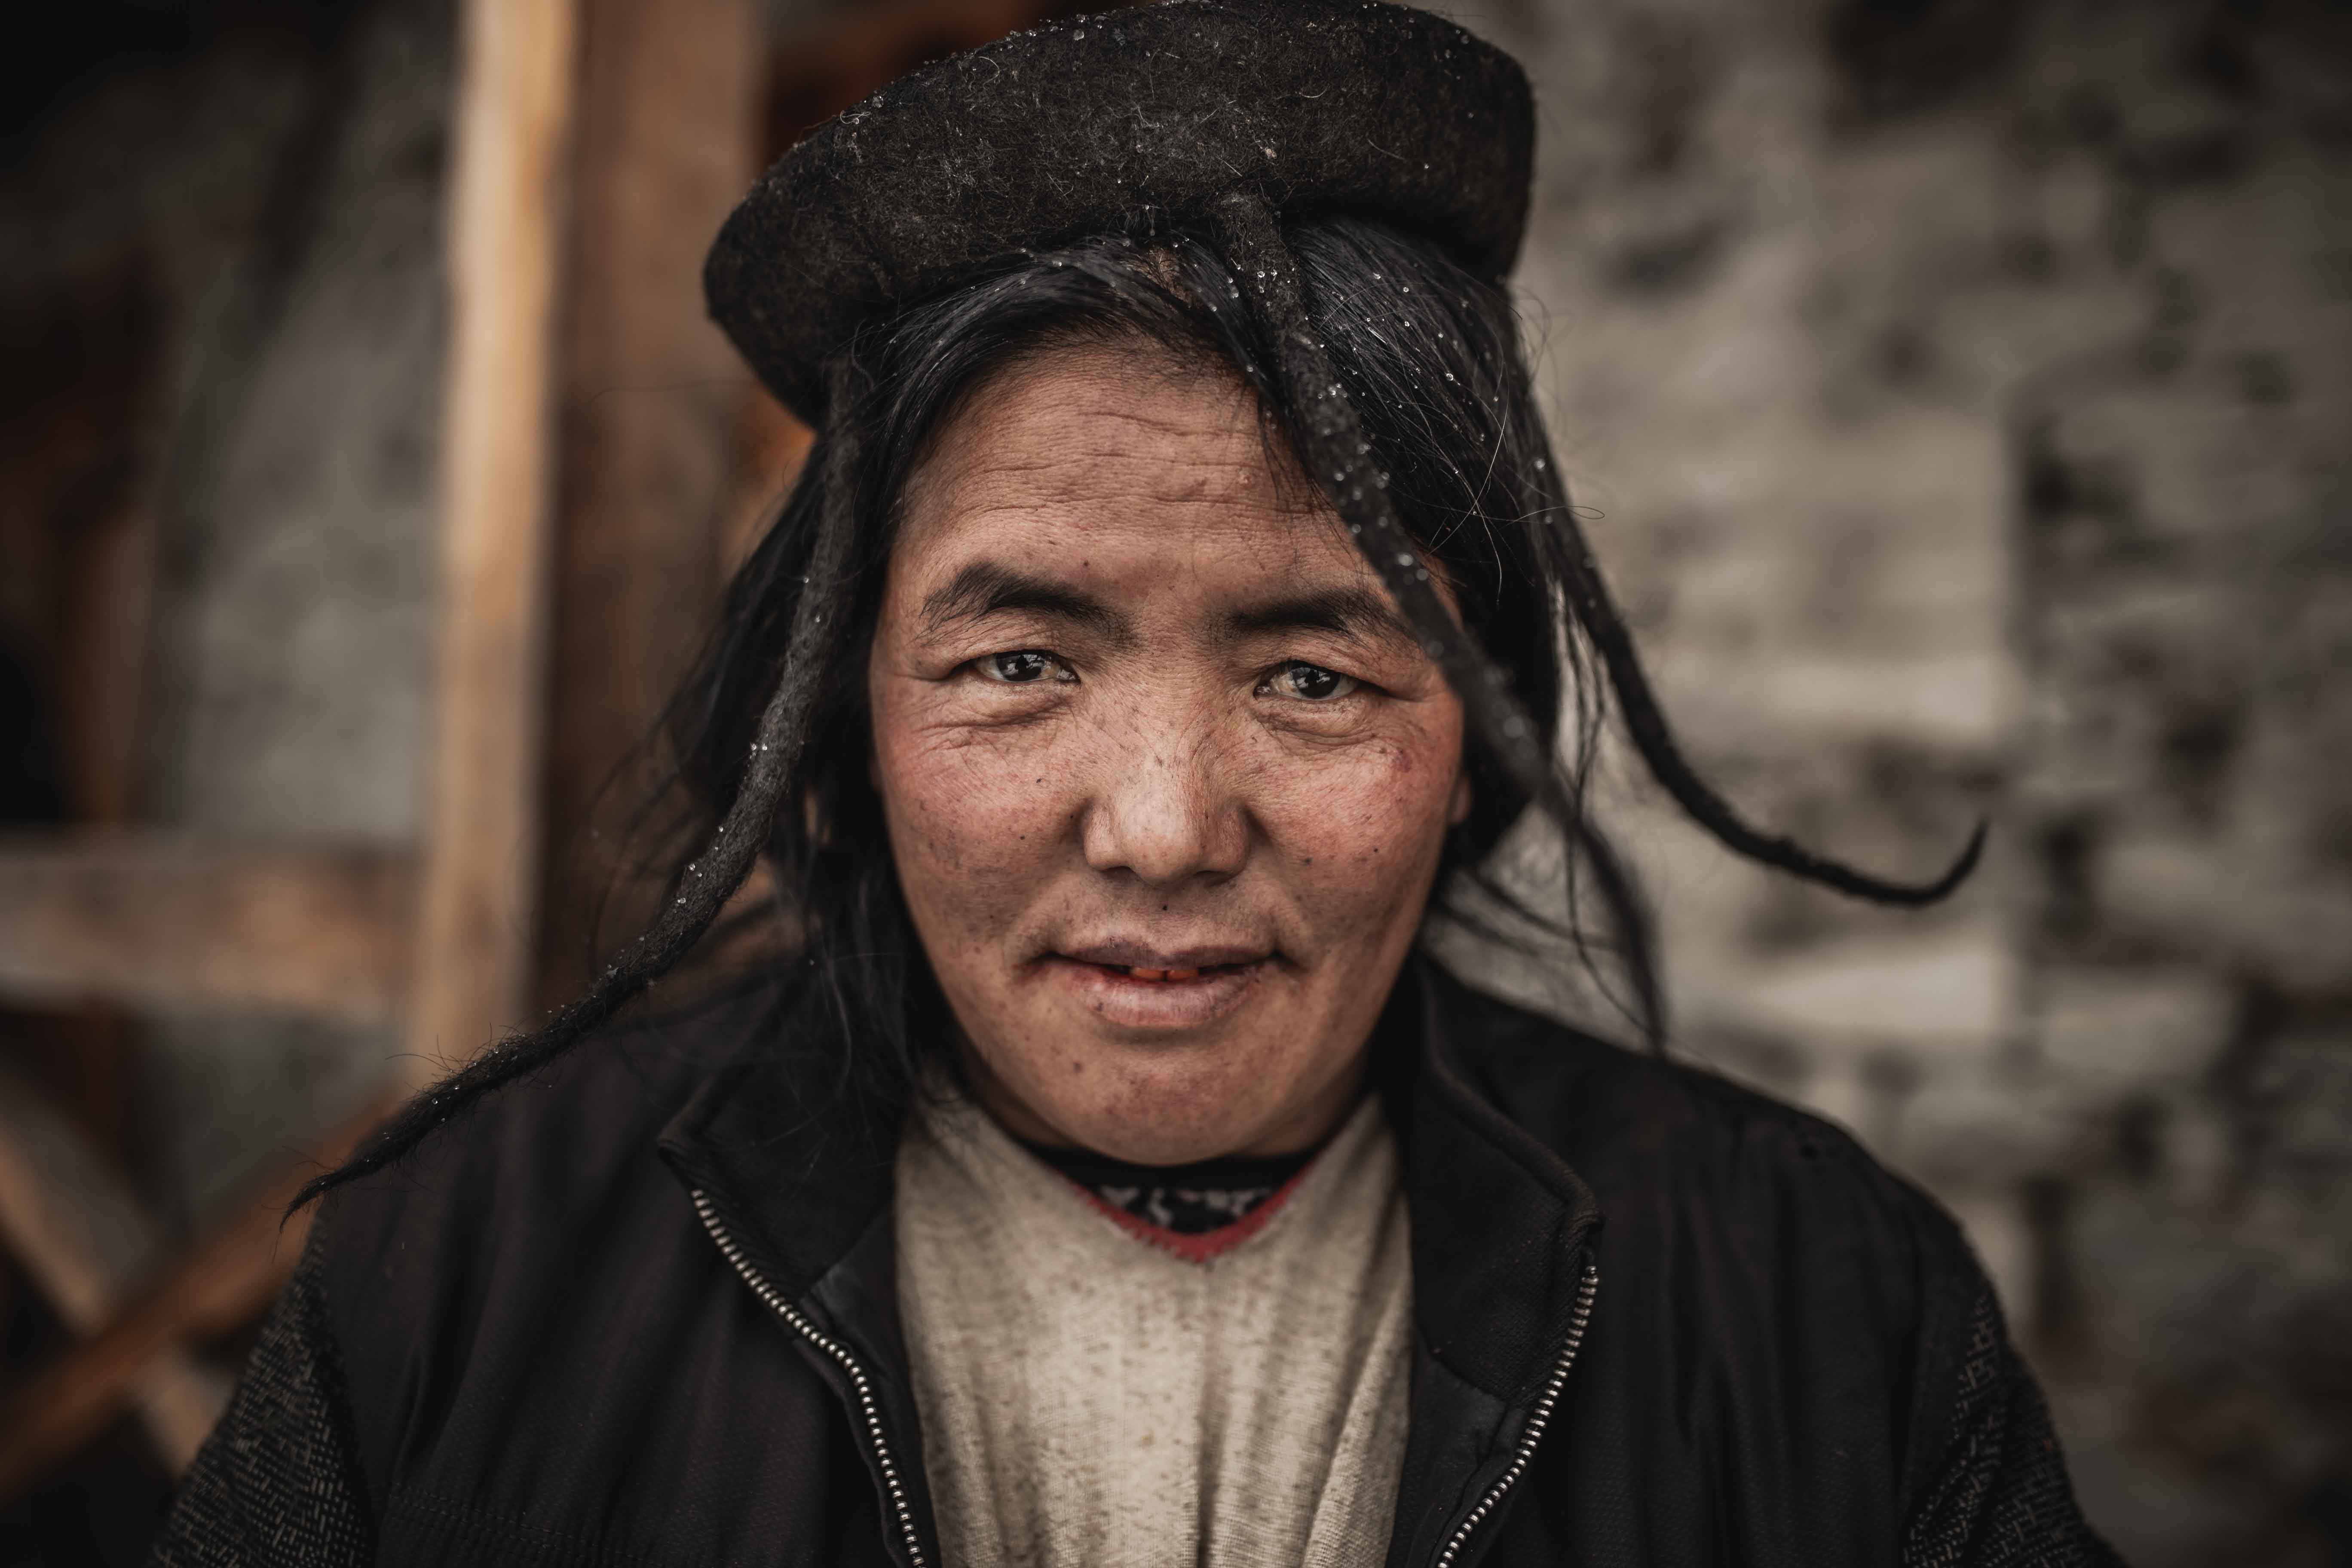 Elderly old Brokpa Tribe woman in Merak, Bhutan during the winter. Portrait photography